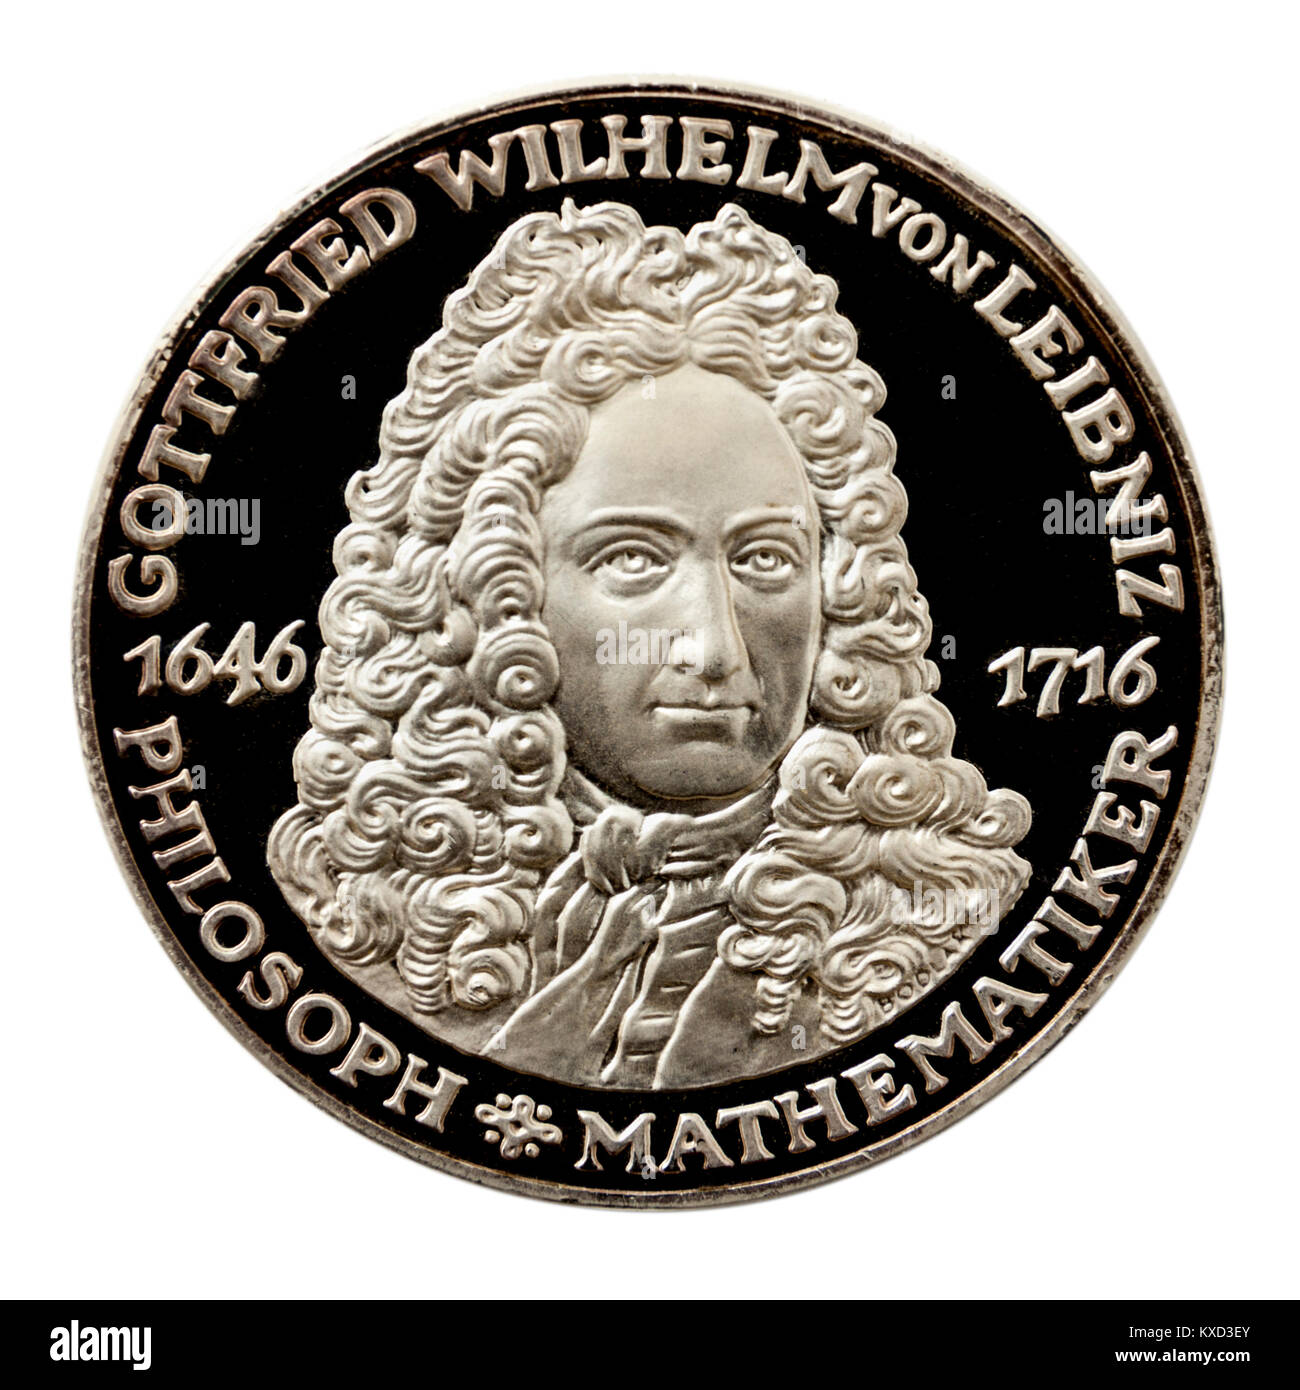 99.9% Proof Silver Medallion featuring Gottfried Wilhelm von Leibniz (1646-1716), the German mathematician famous for inventing the Leibniz-wheel. Stock Photo